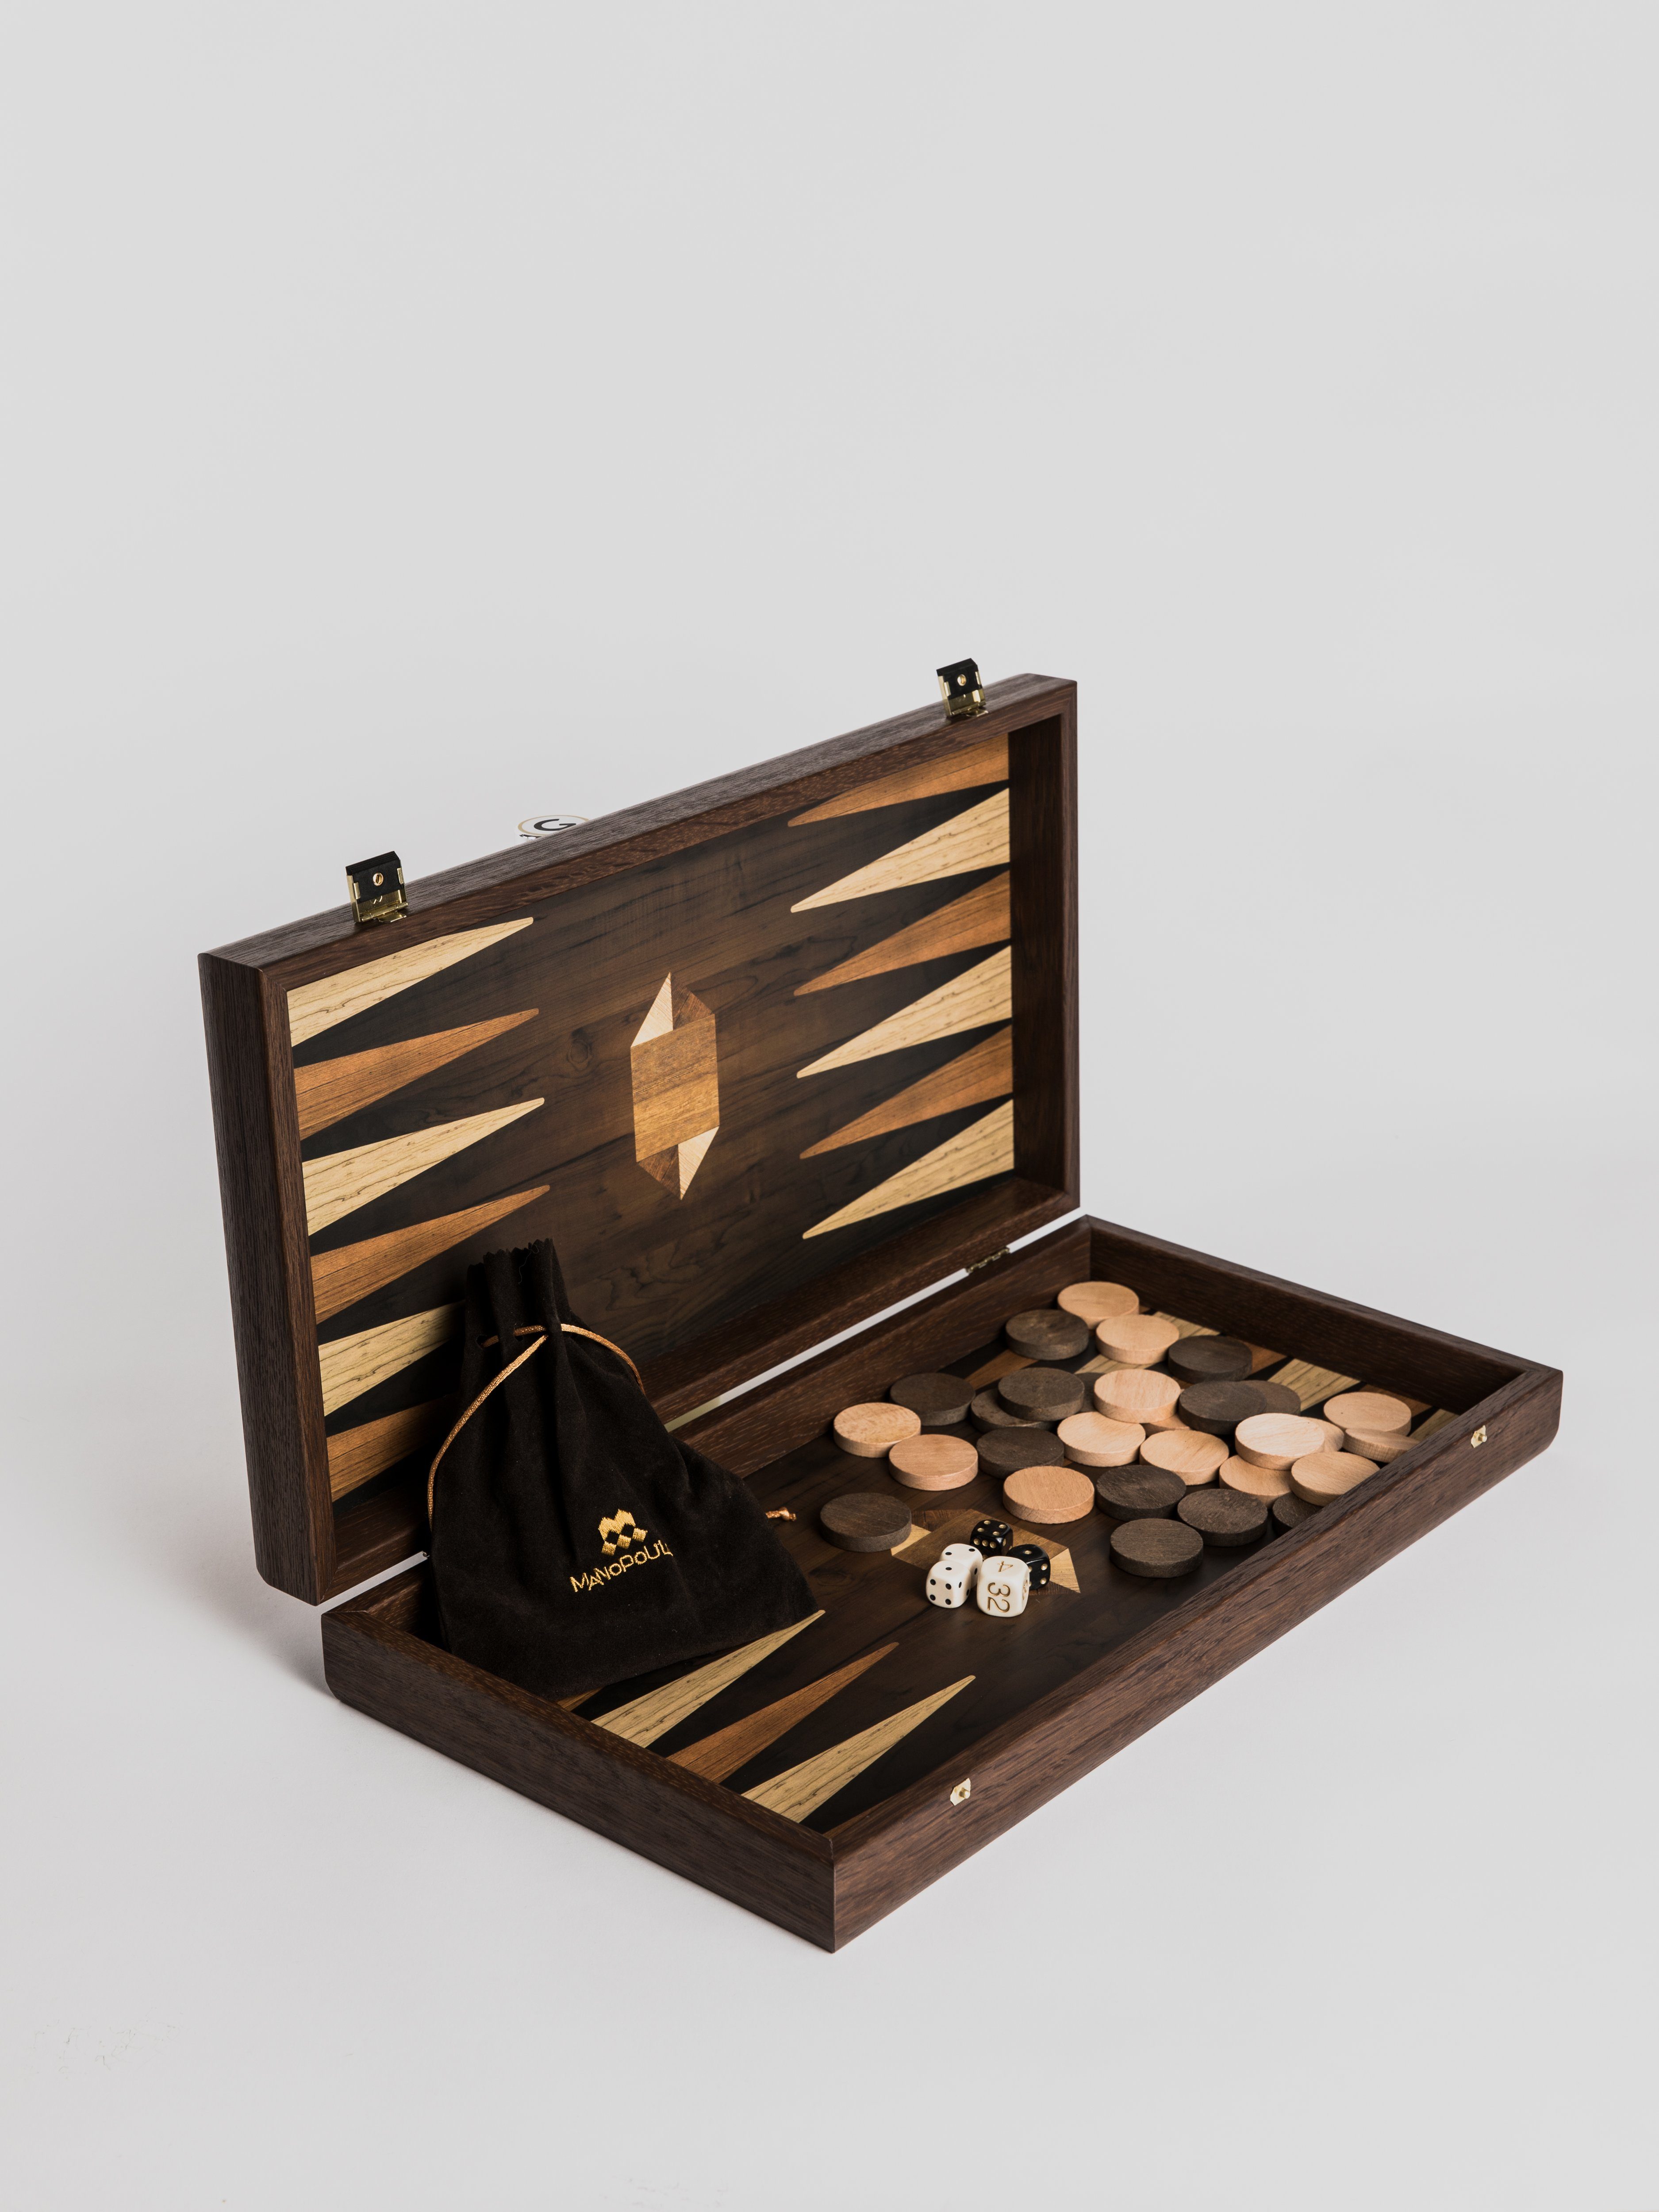 Backgammon - Geometrical Wood Motif Board Game Manopoulos 